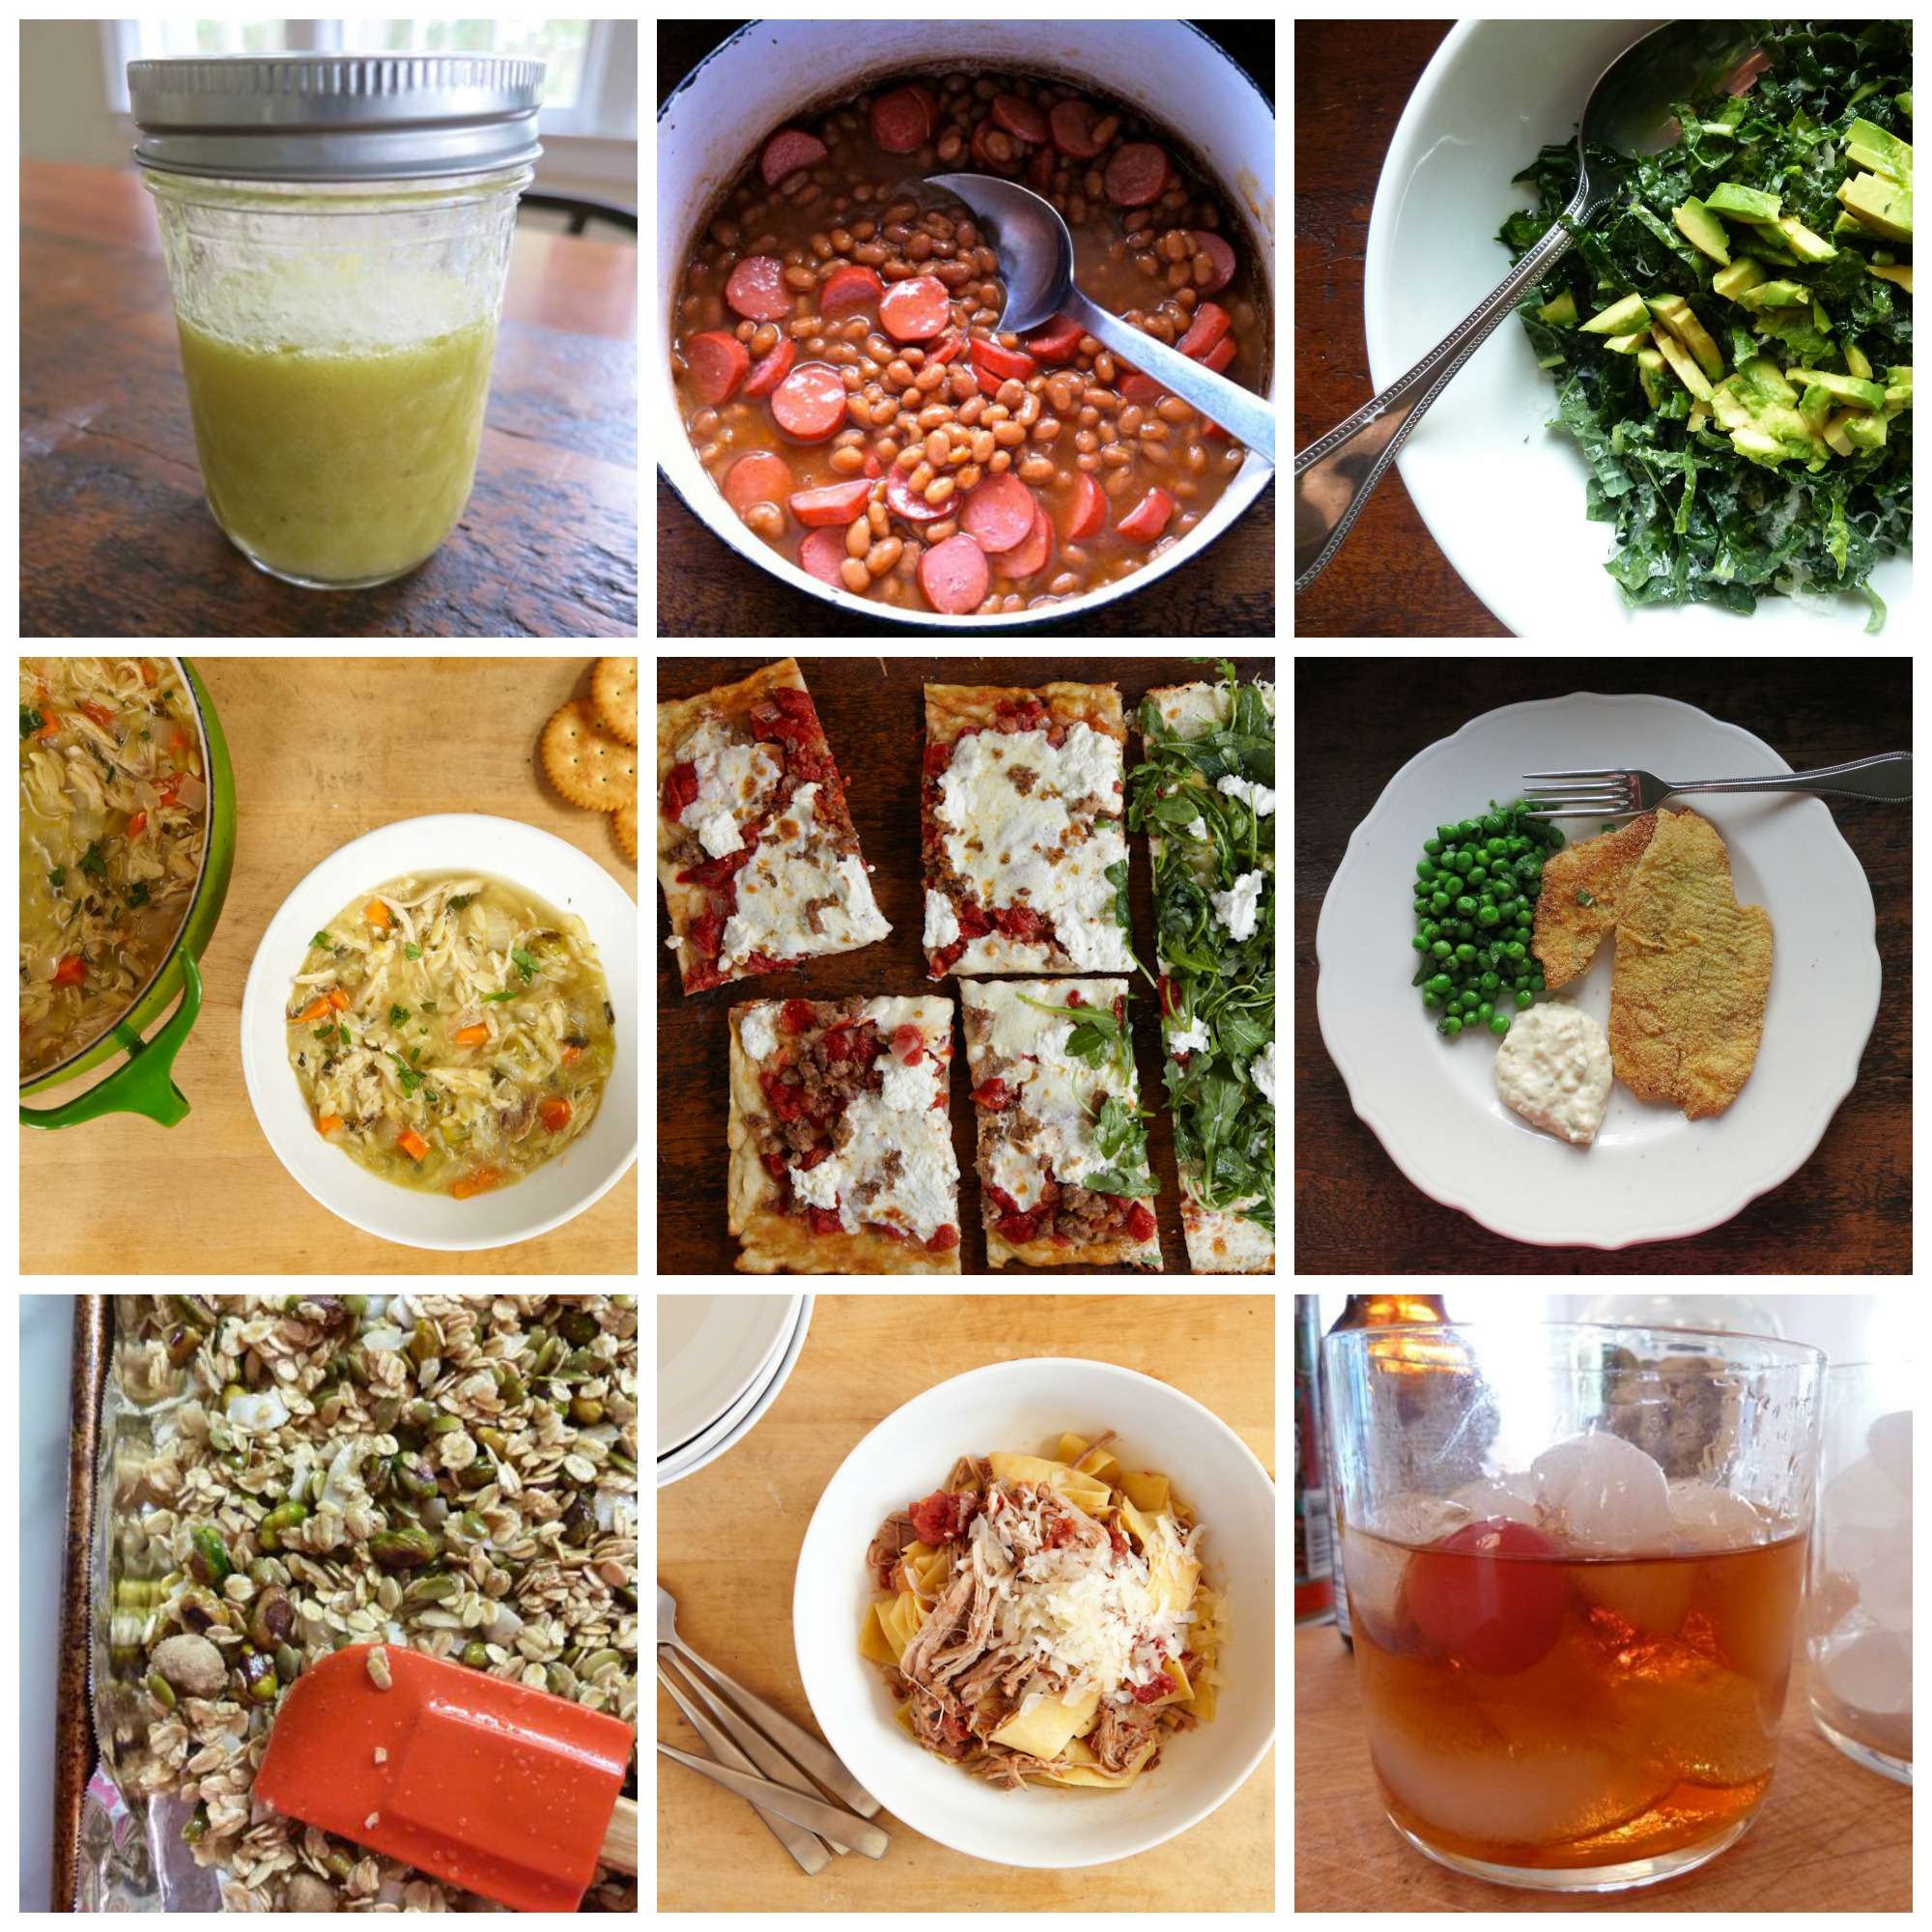 http://www.dinneralovestory.com/wp-content/uploads/2013/10/Recipes-Every-Parent-Should-Know.jpg